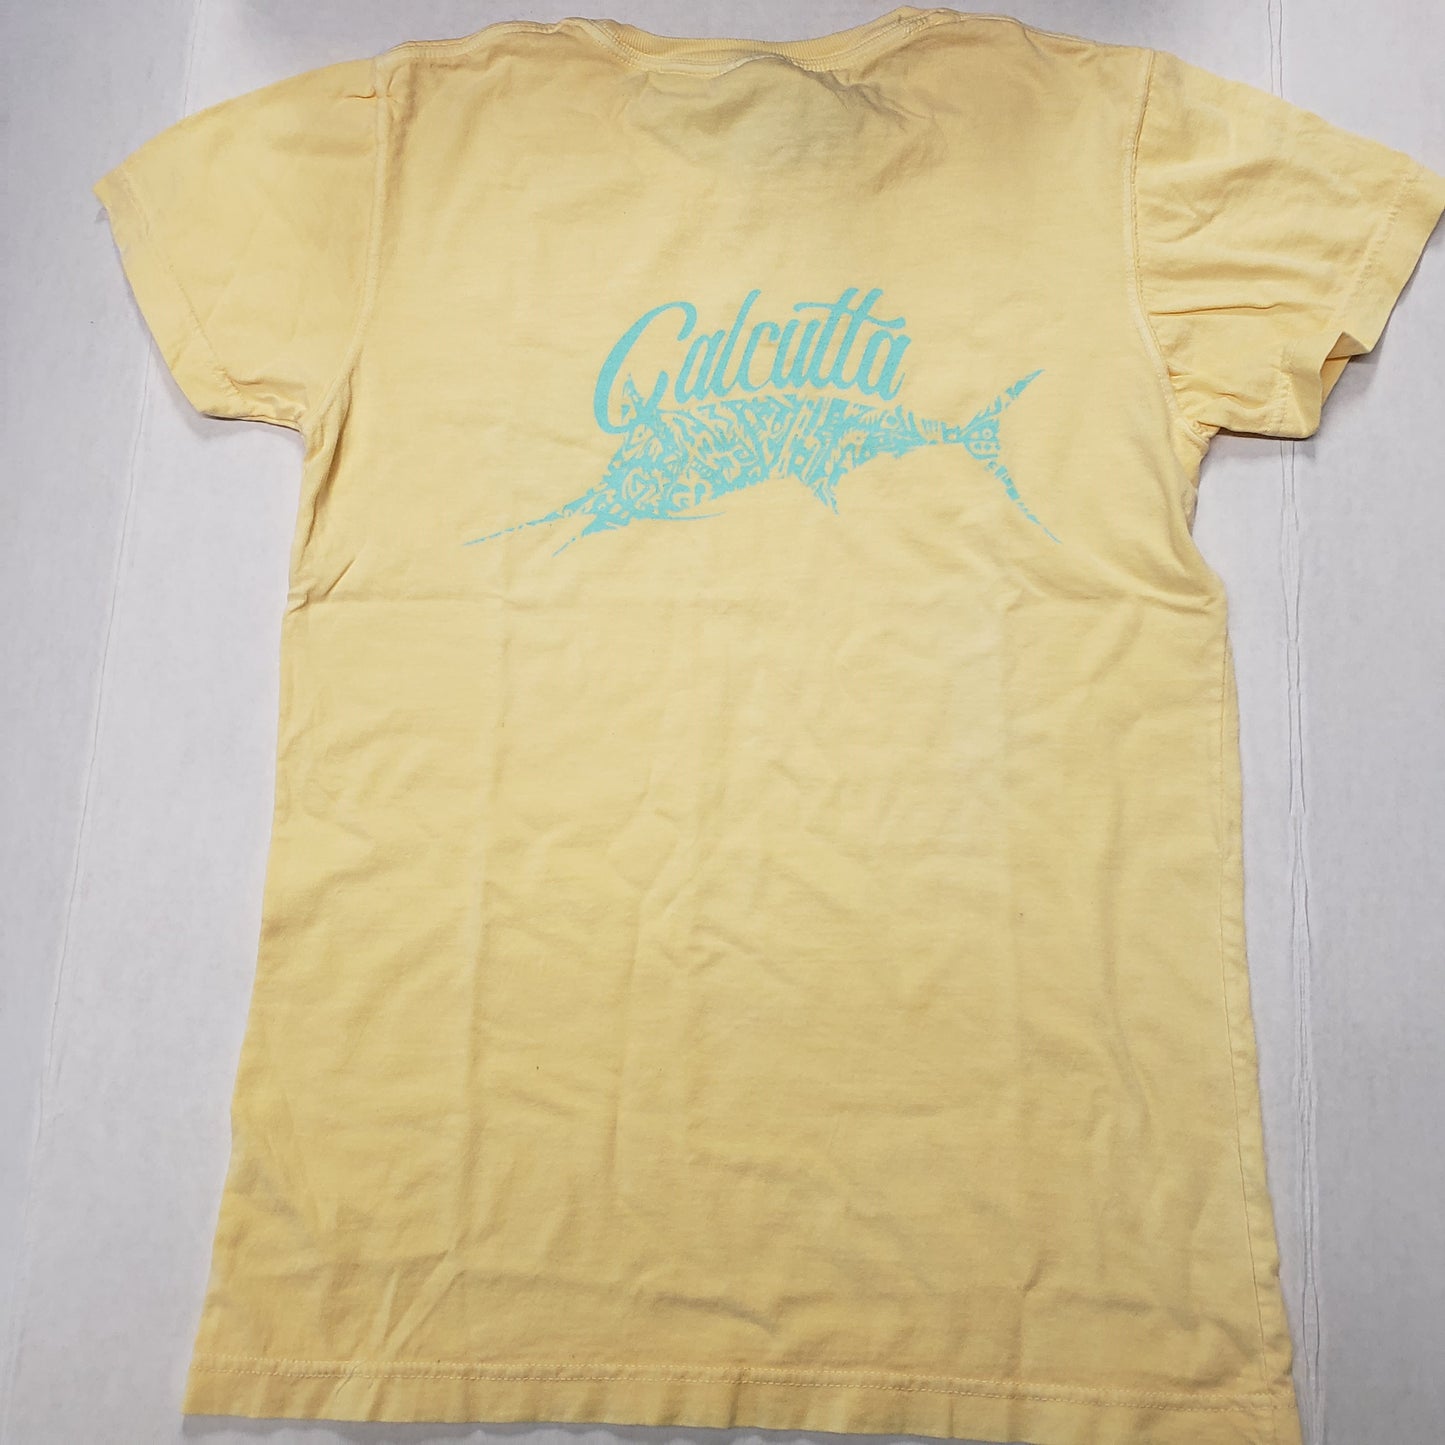 New Authentic Calcutta Ladies Short Sleeve Shirt  Butter/ Front Coastal Blue Original Logo & Back Marlin Small